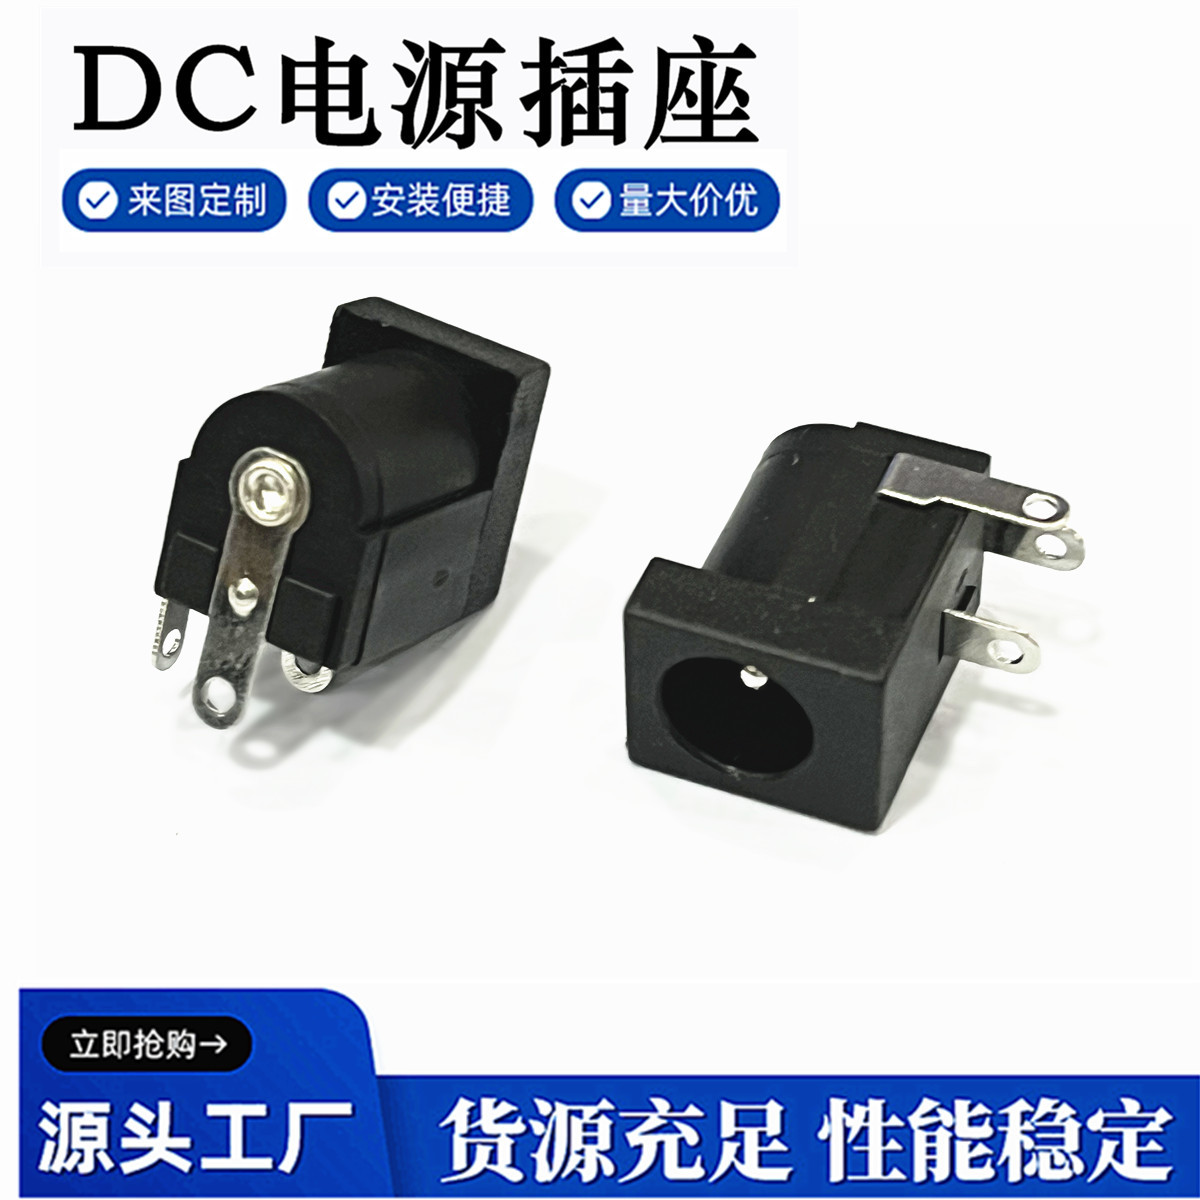 DC电源插座 DC005  DC插座 DC005插座 5.5*2.1DC座 2.0DC母座